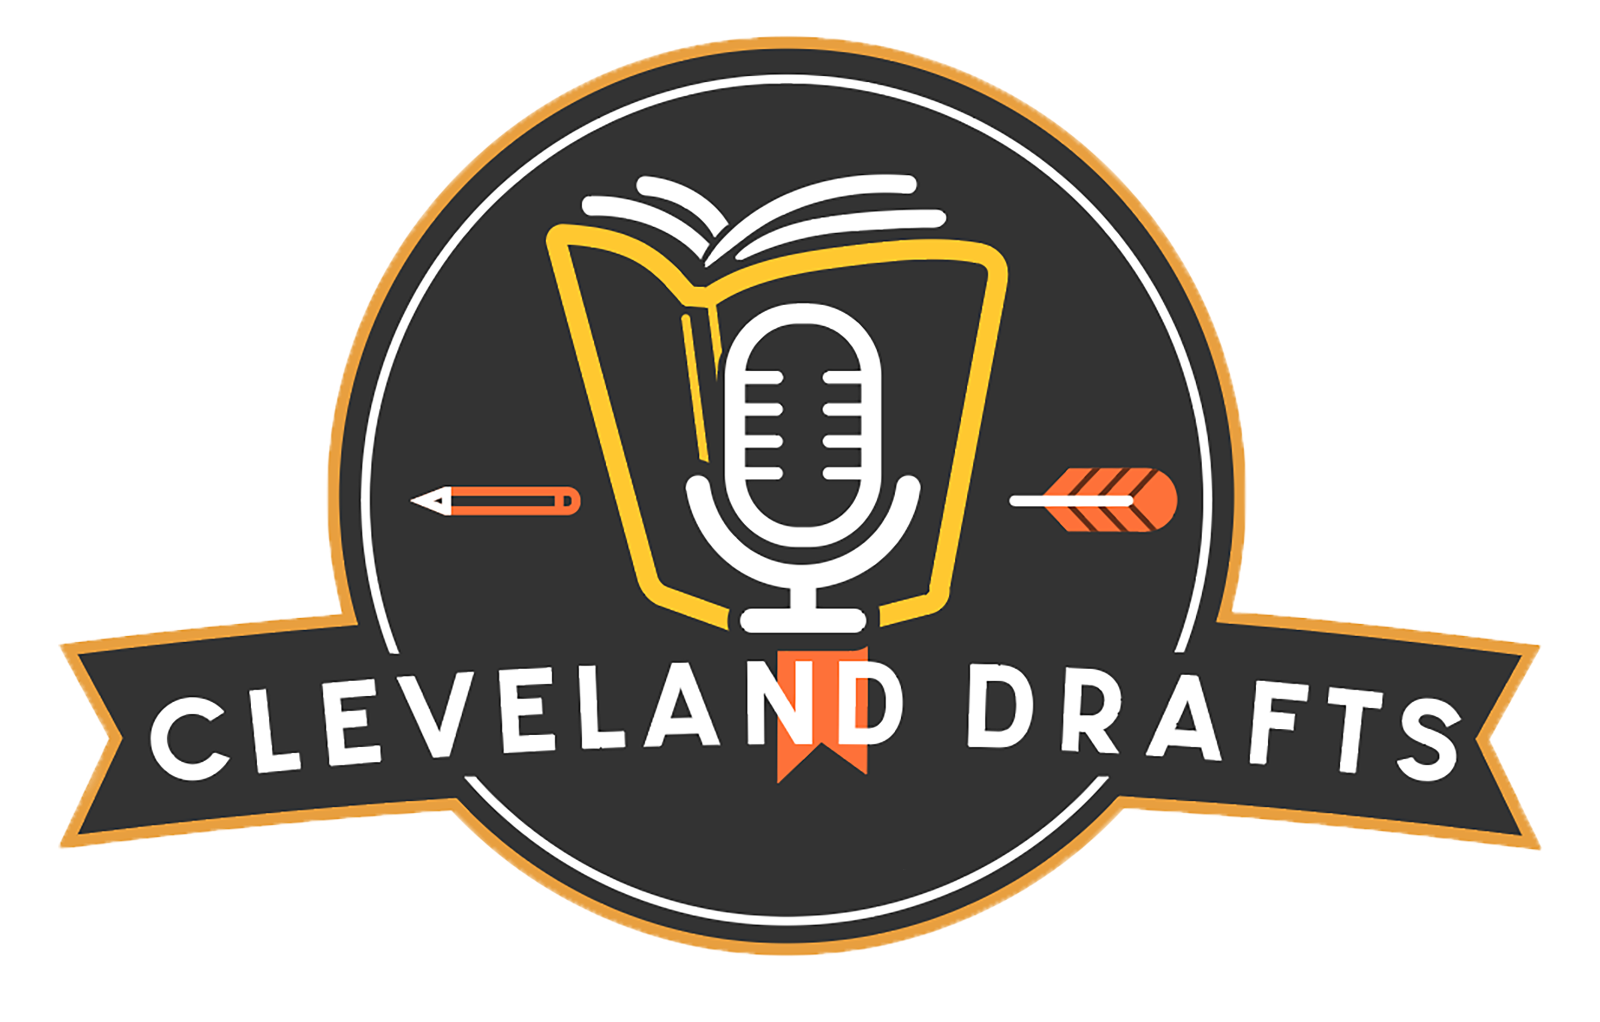 Cleveland Drafts logo